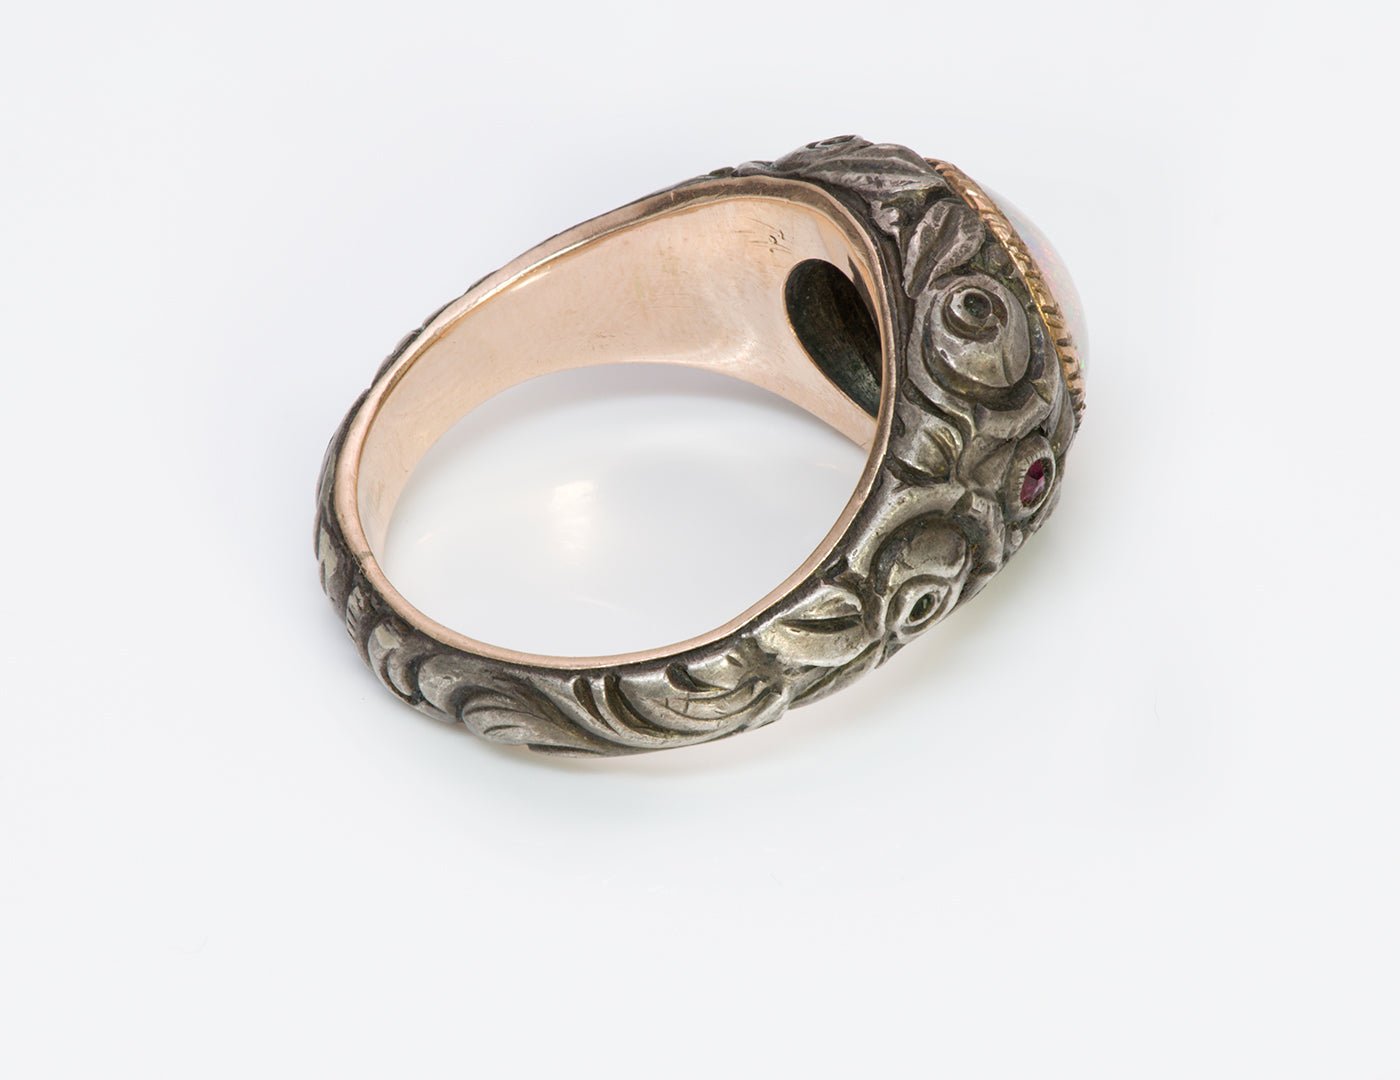 Antique Opal Carved Silver Gold Men's Ring